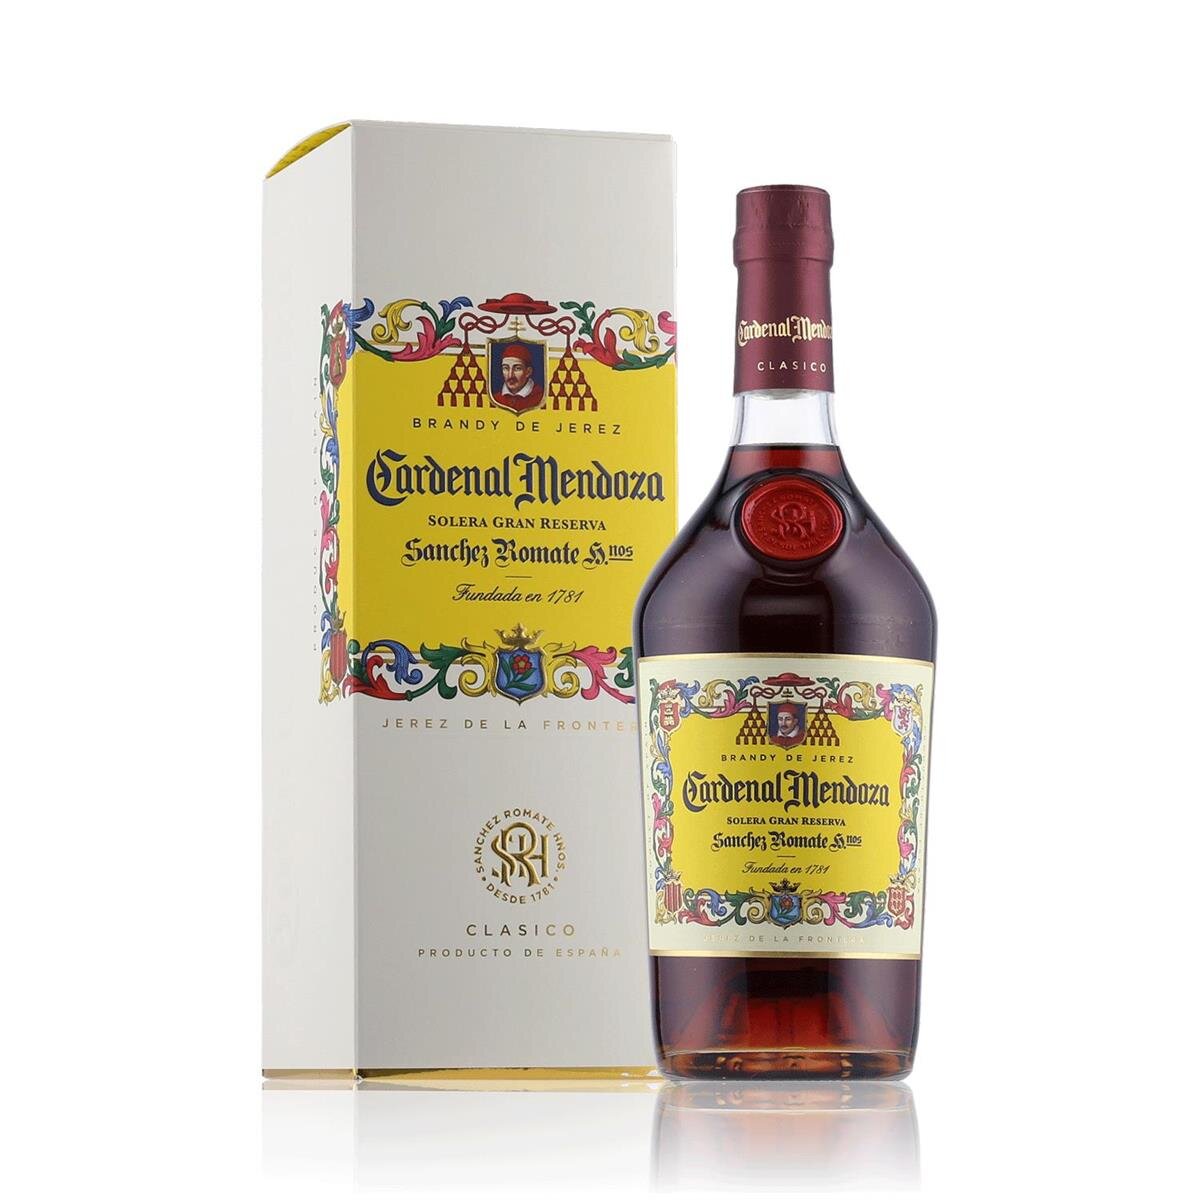 Cardenal Mendoza Solera Gran Brandy Geschenk 40% Vol. 0,7l in Reserva